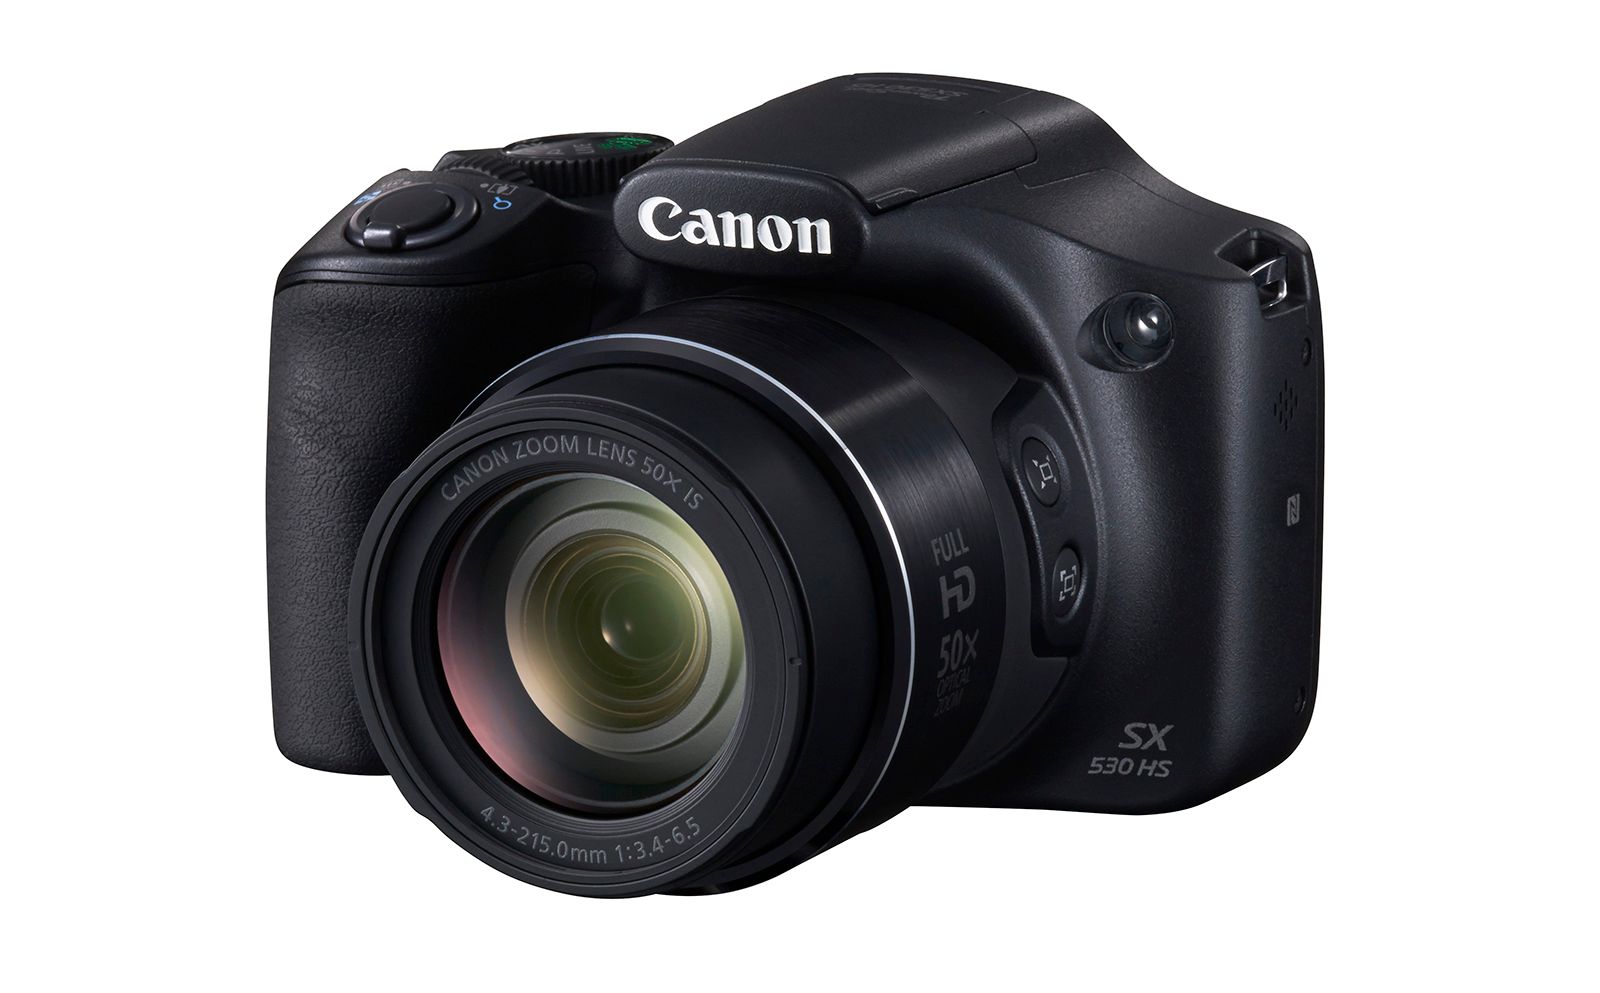 canon powershot sx530 hs boasts 50x mega zoom without breaking the bank image 1